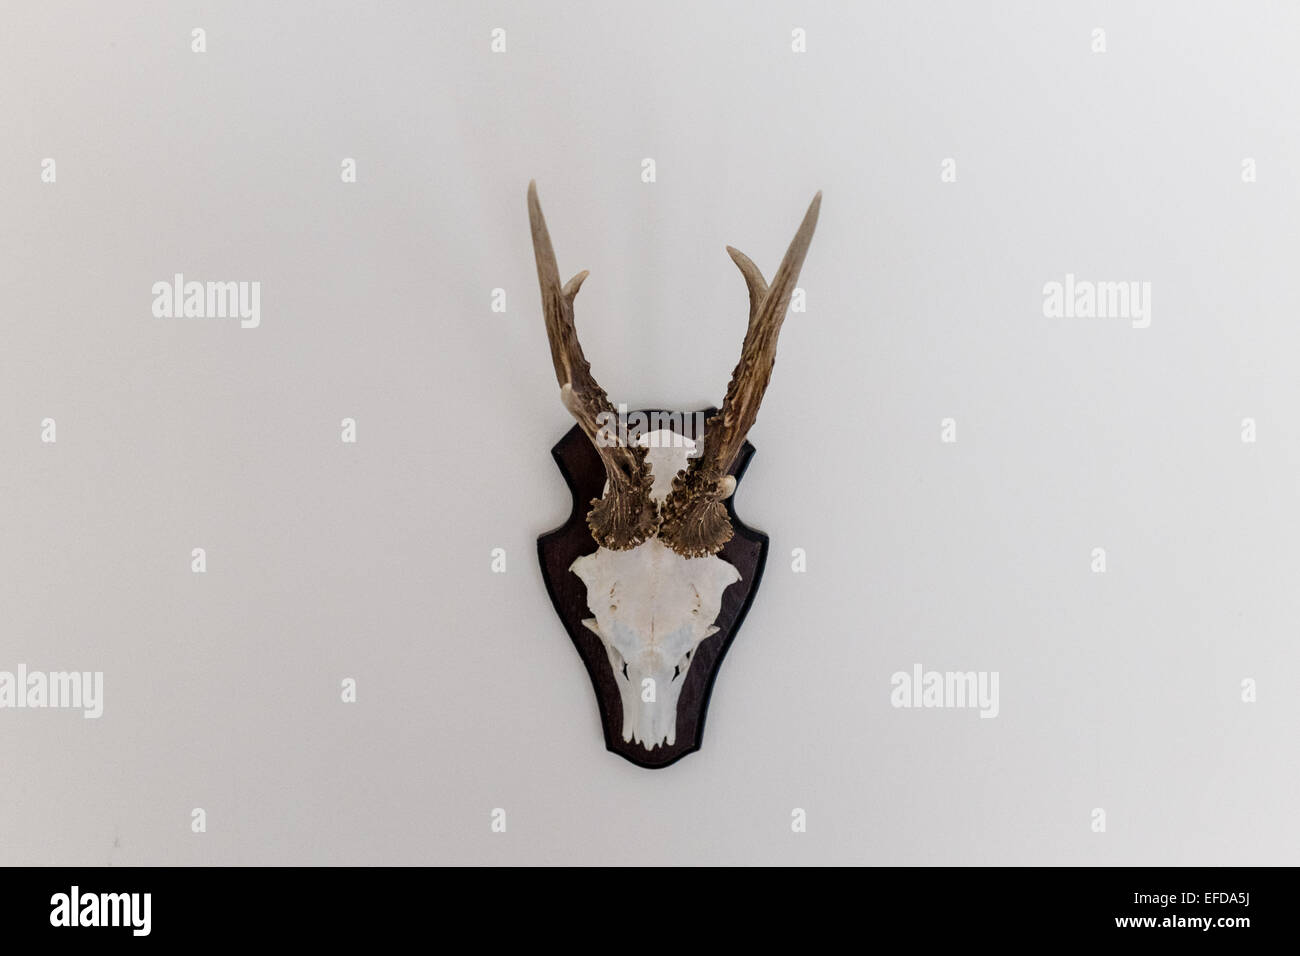 Deer head skull with antlers Stock Photo